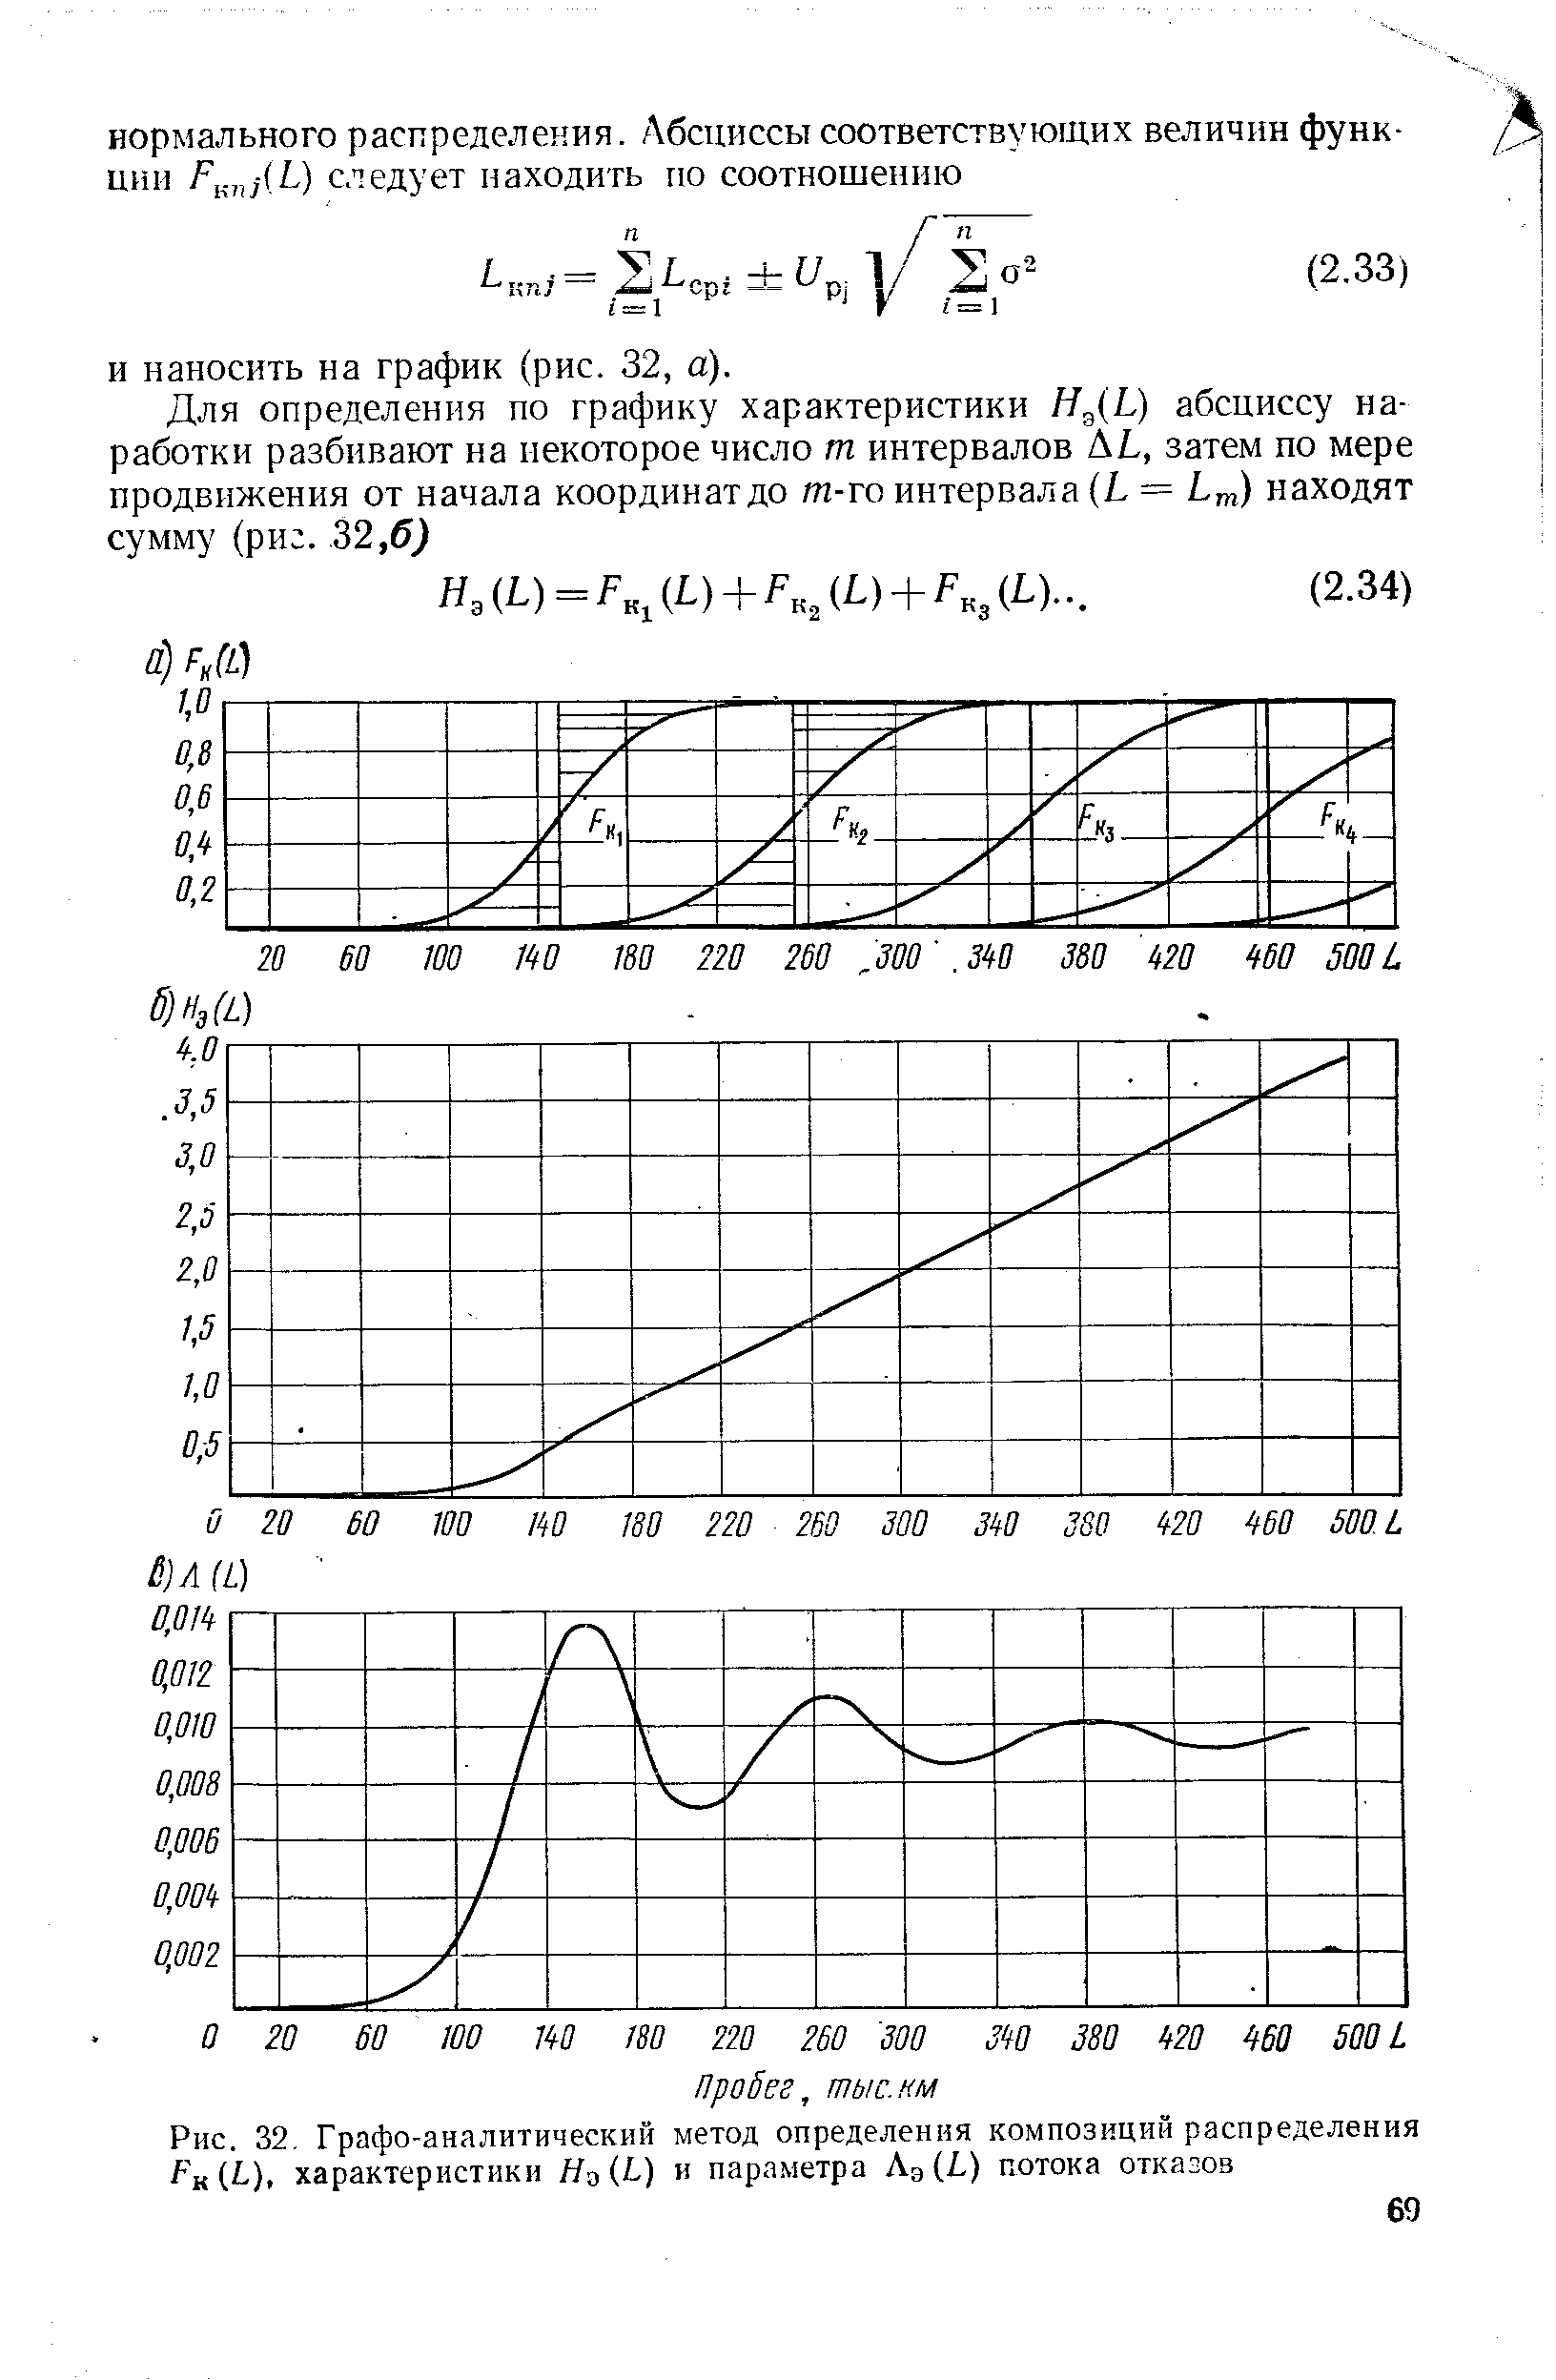 Рис. 32. <a href="/info/261143">Графо-аналитический метод определения</a> композиций распределения к ( ), характеристики Яо ( ) и параметра Лэ ( ) потока отказов
